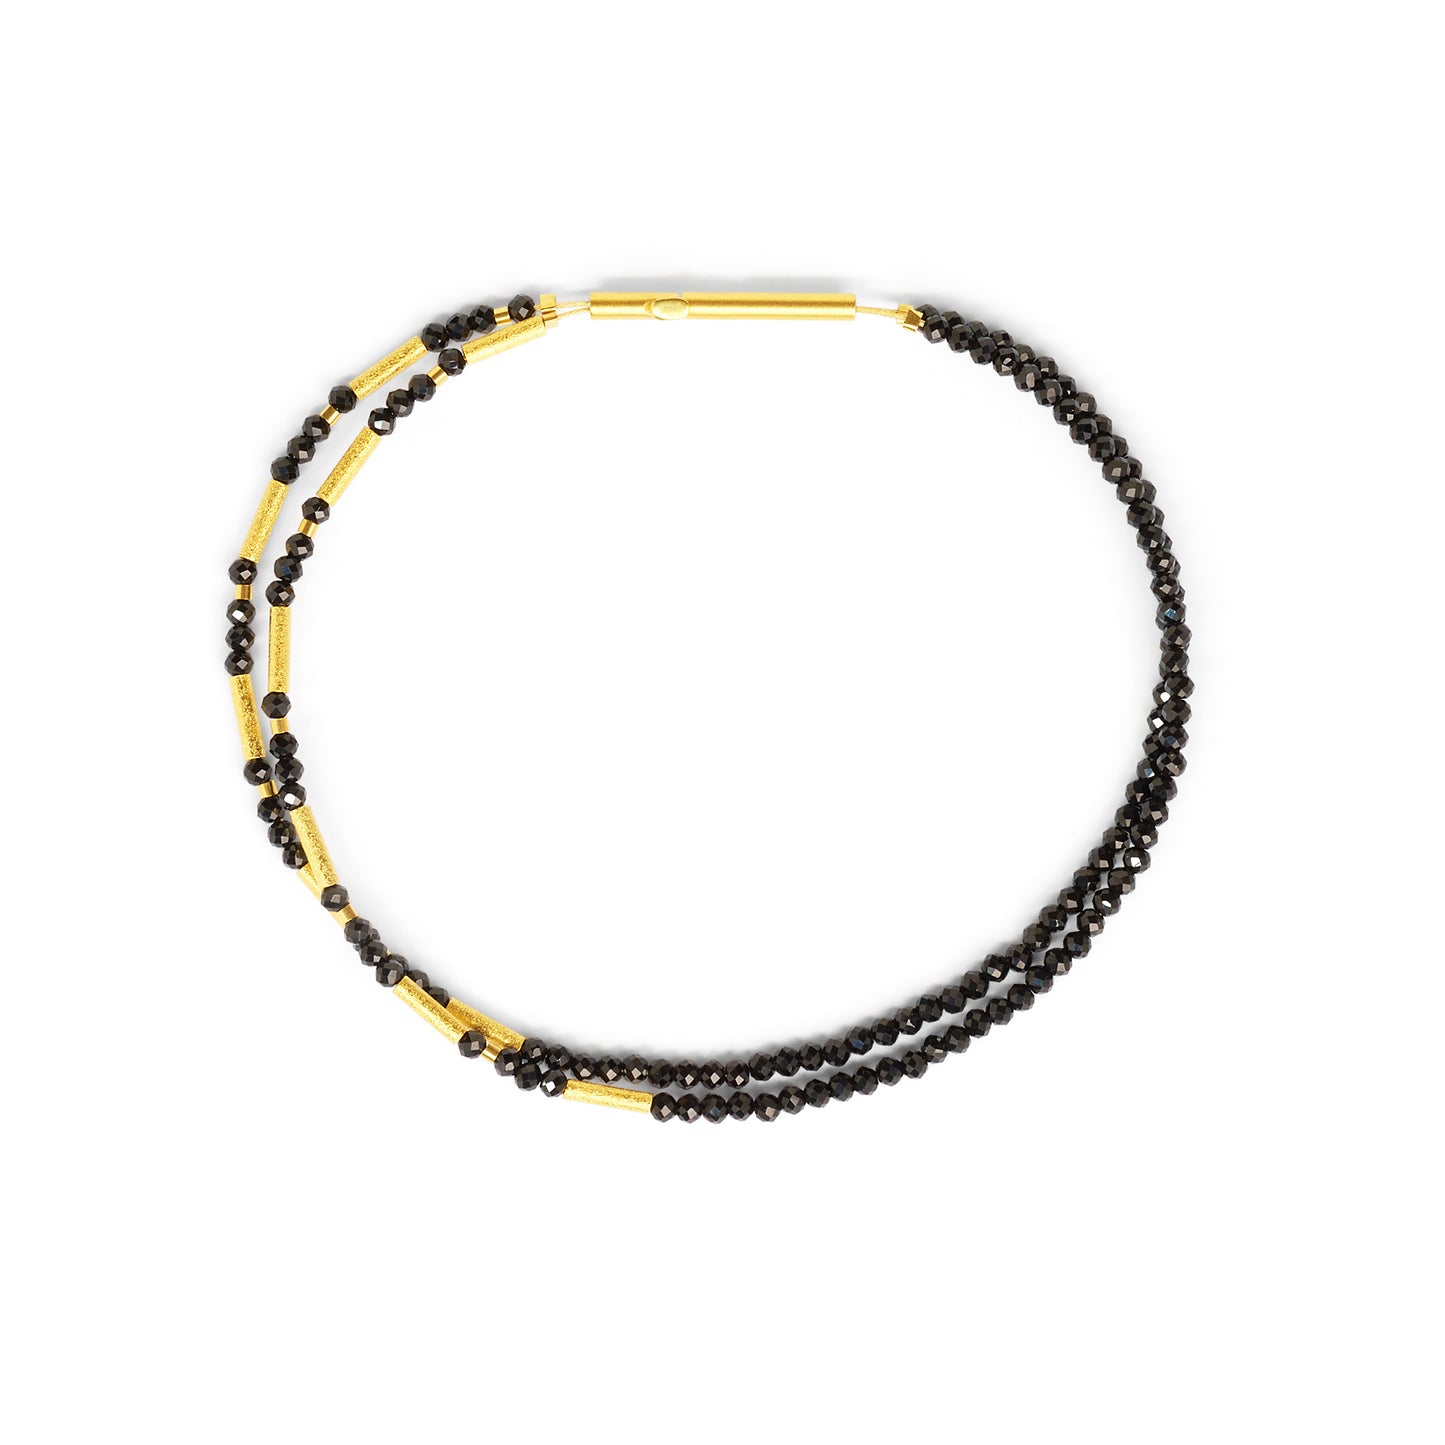 Bernd Wolf Collection "Clini" BlackSpinel Bracelet